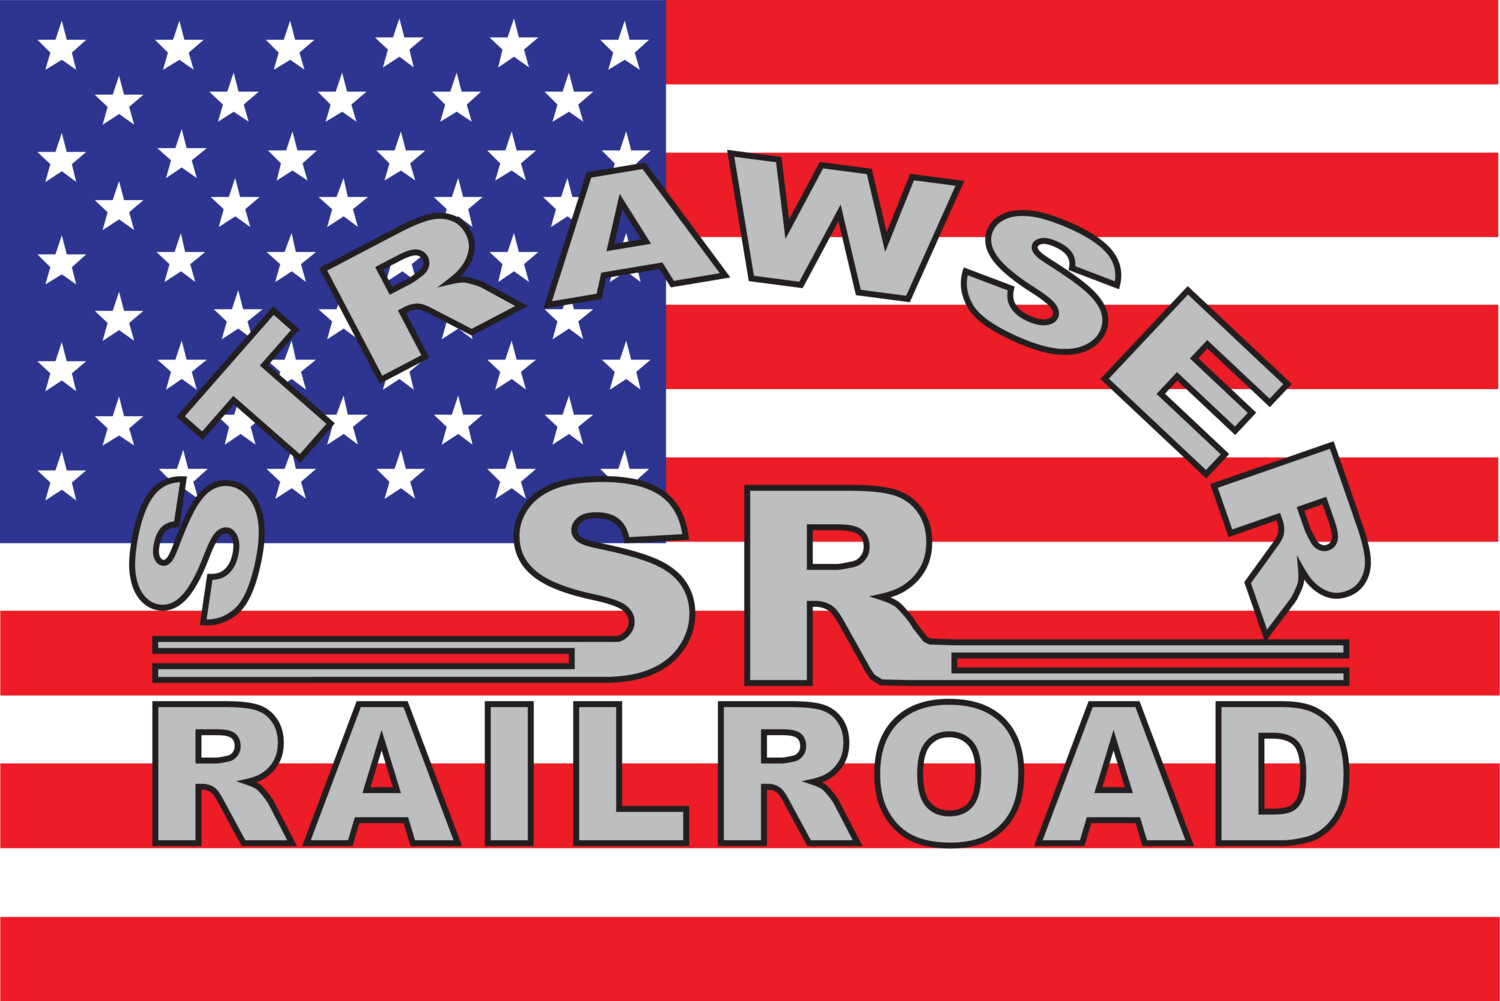 Stawser Raliroad Flag Logo Vinyl